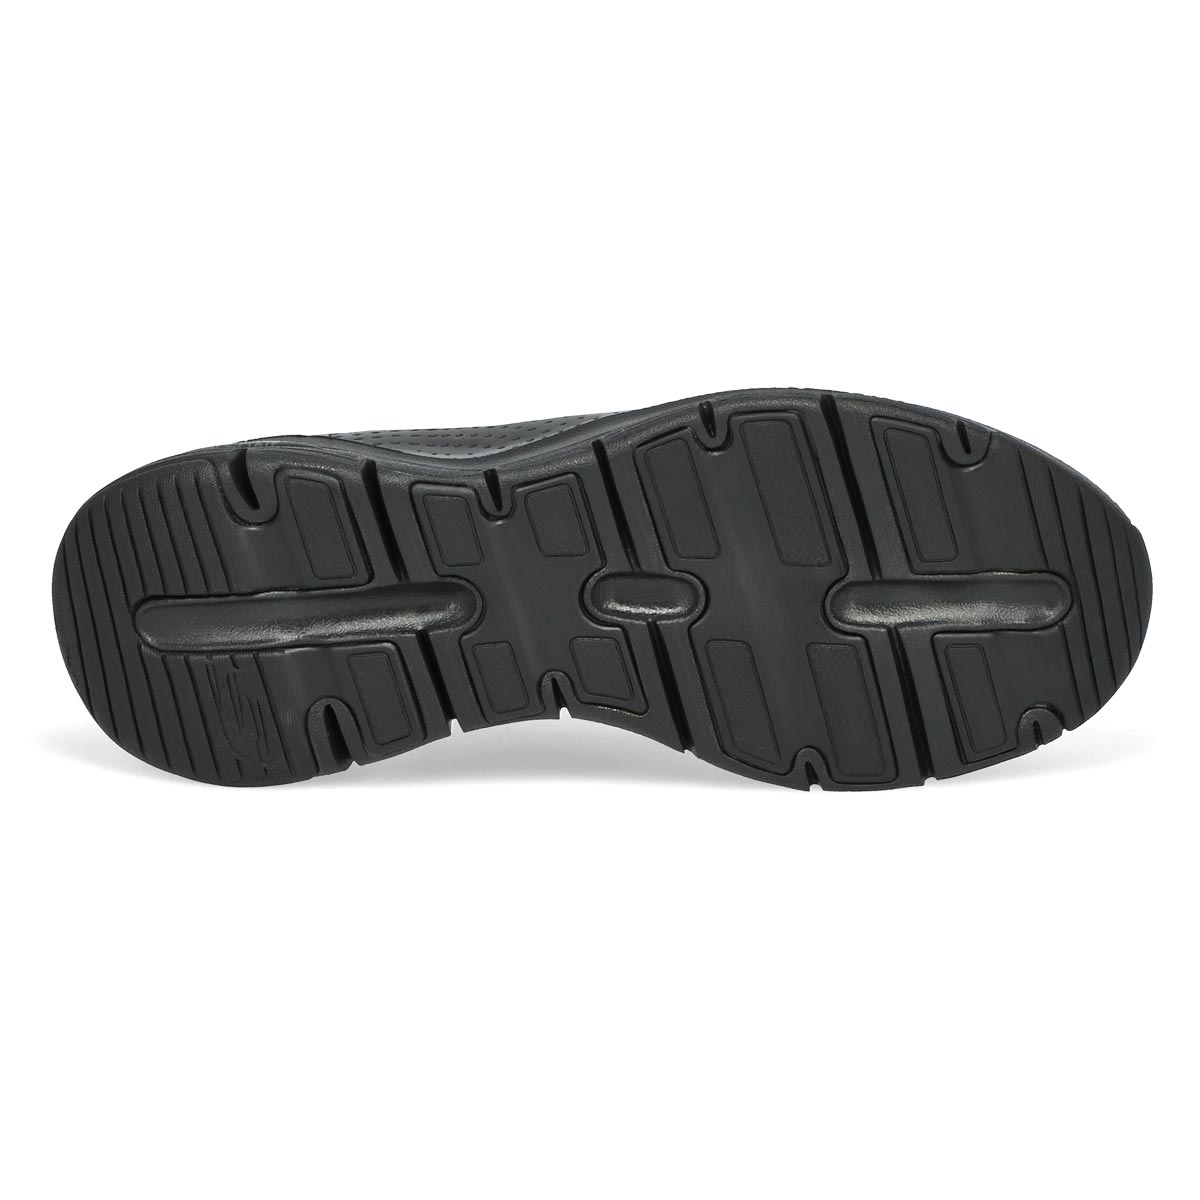 Men's Arch Fit Slip On Sneaker - Black/Black